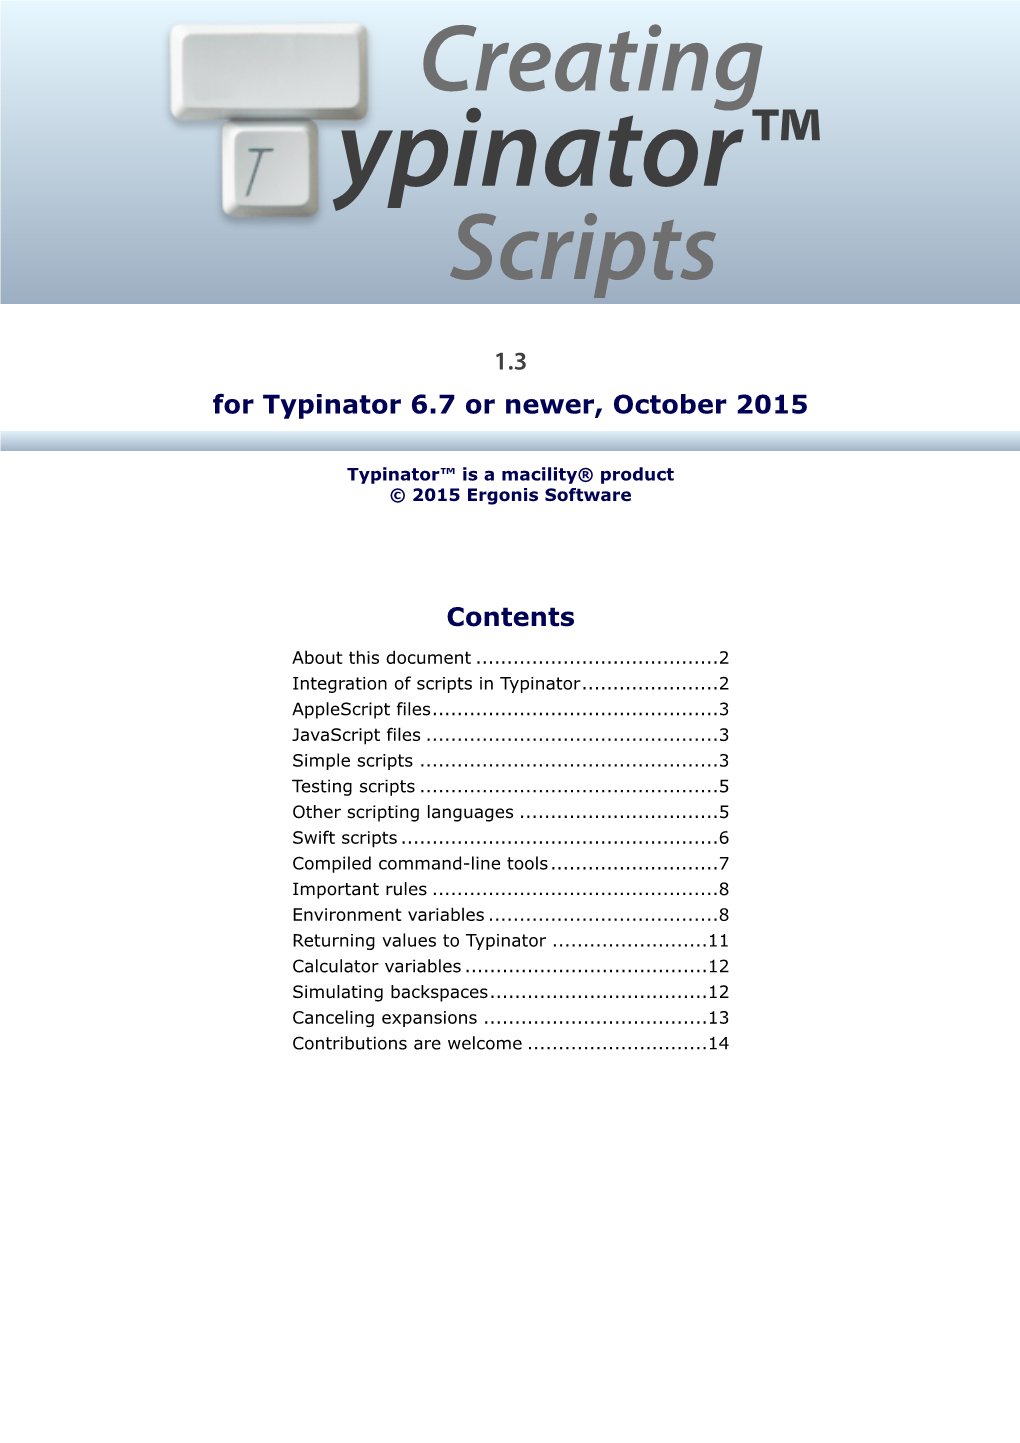 Creating Typinator Scripts Version 1.3